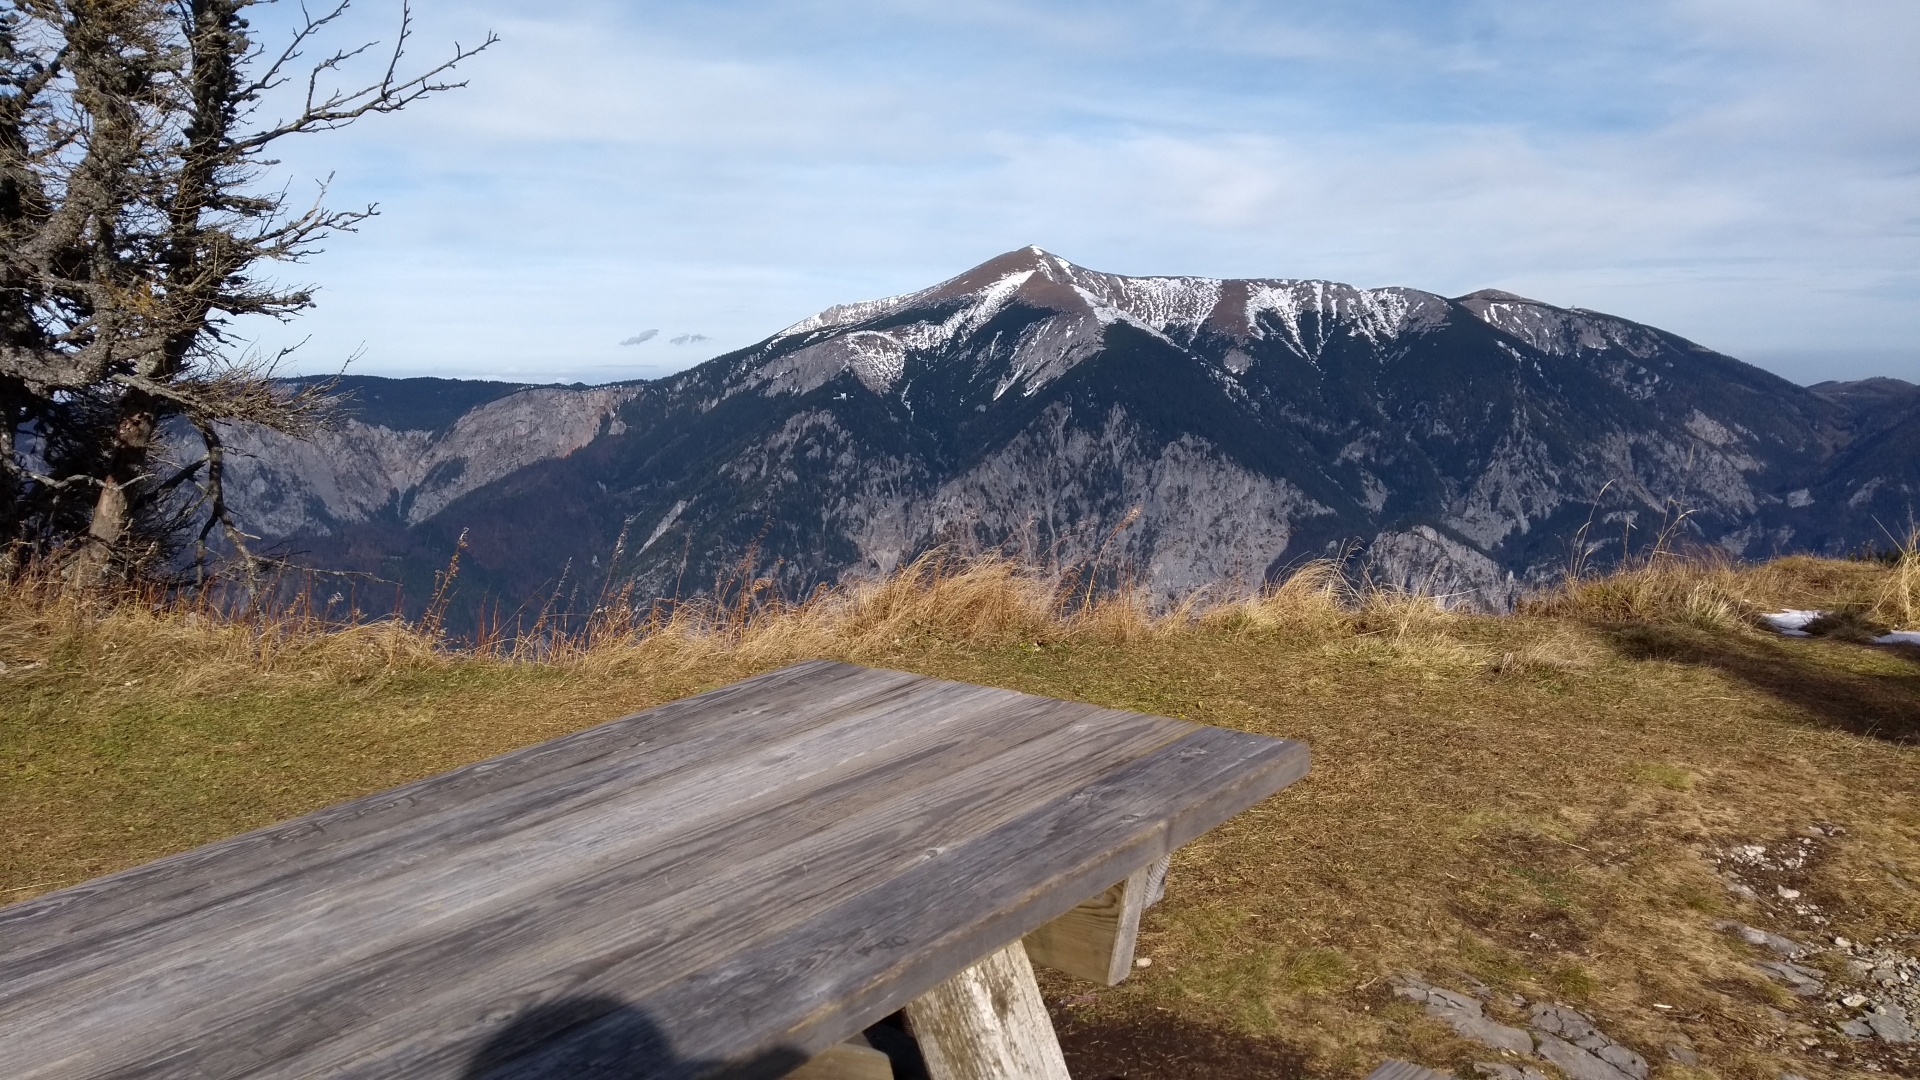 Rest area at the exit of Alpenvereinssteig